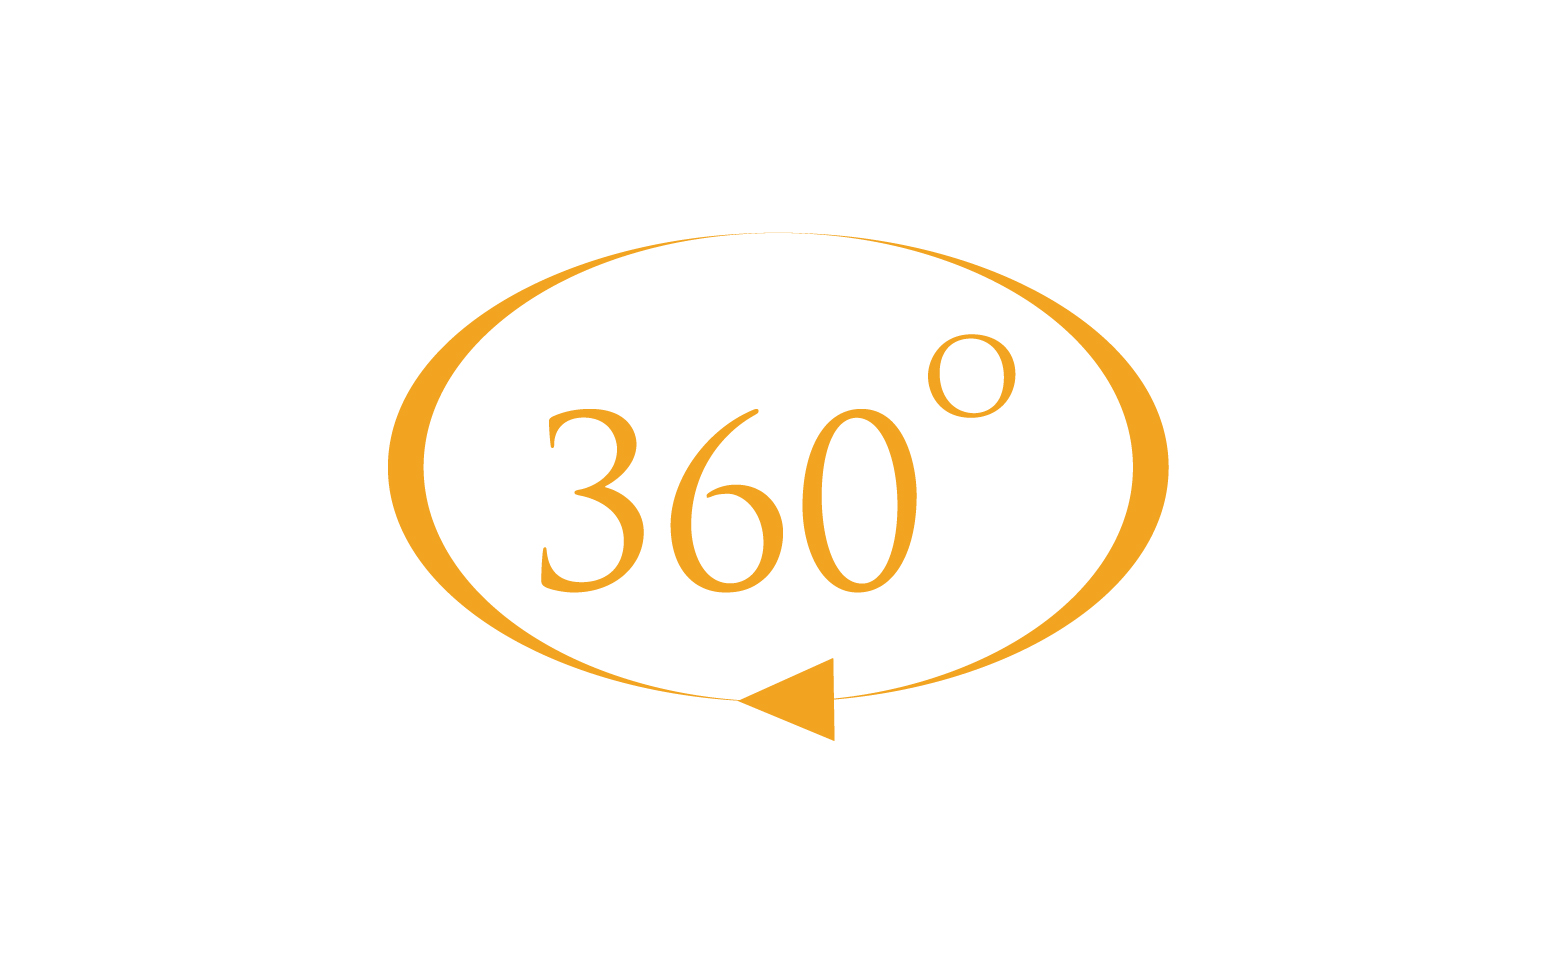 360 degree angle rotation icon symbol logo version v49